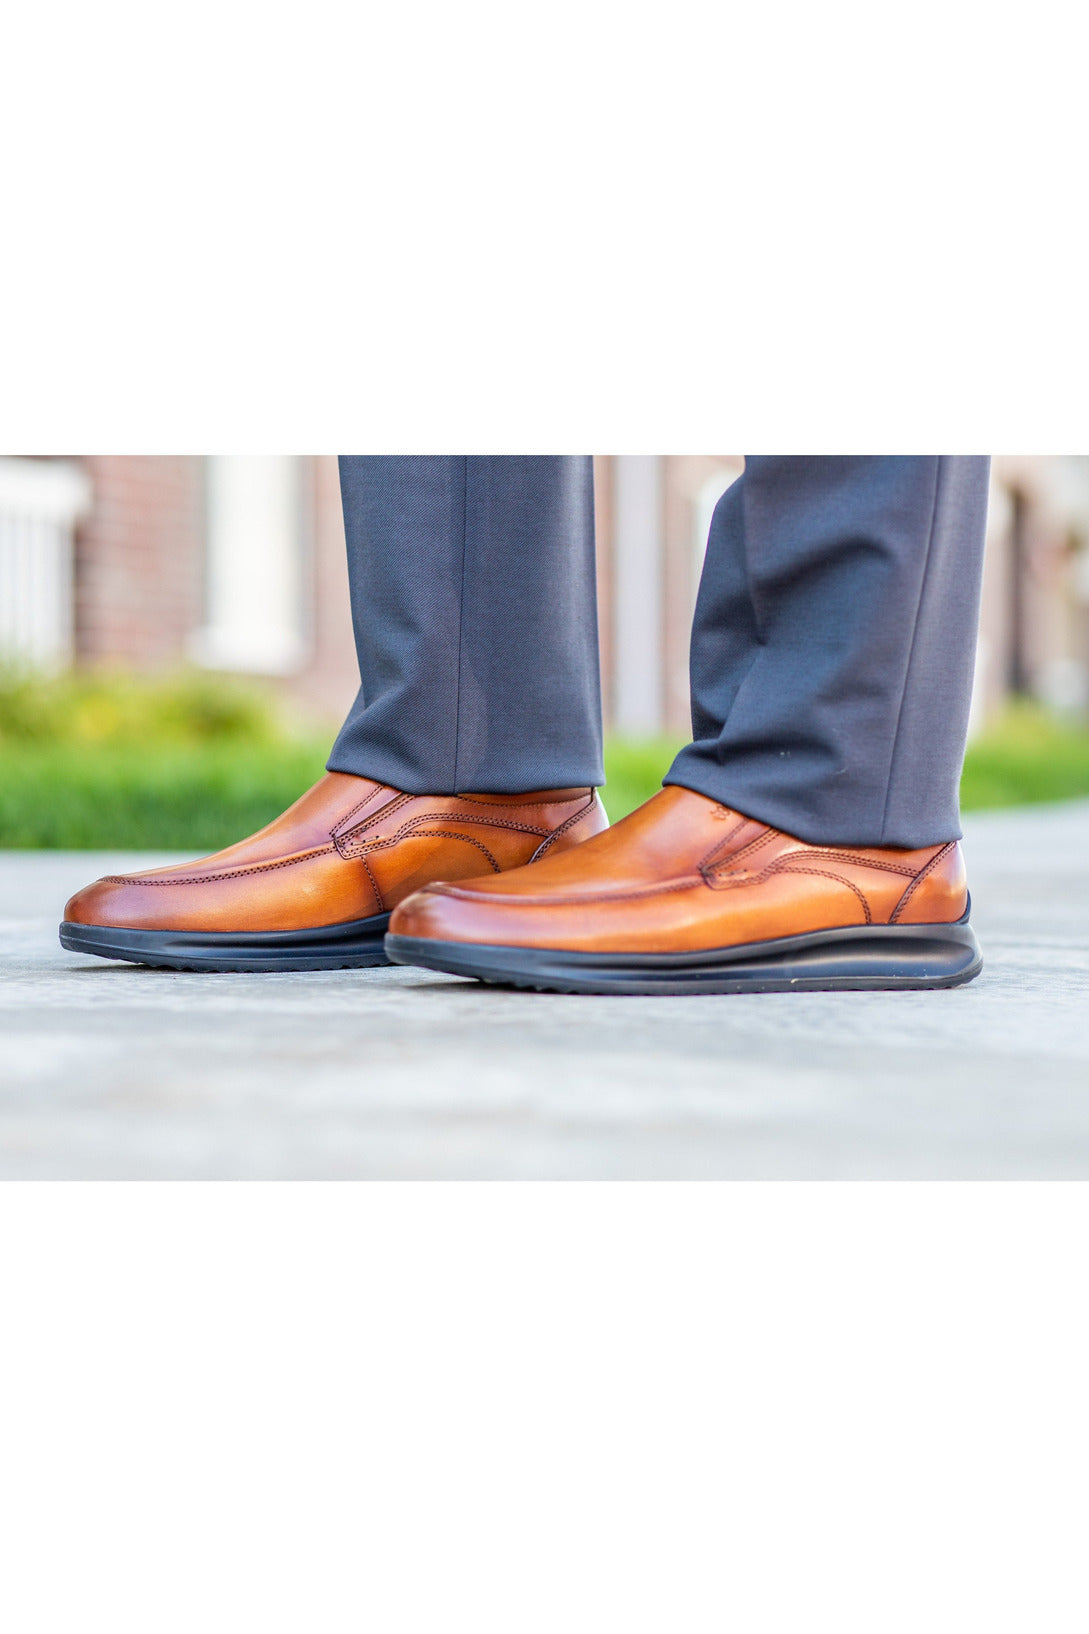 Robbins & Brooks Shoes - Robbins & Brooks Hinckley Apron Toe Slip-on Tan